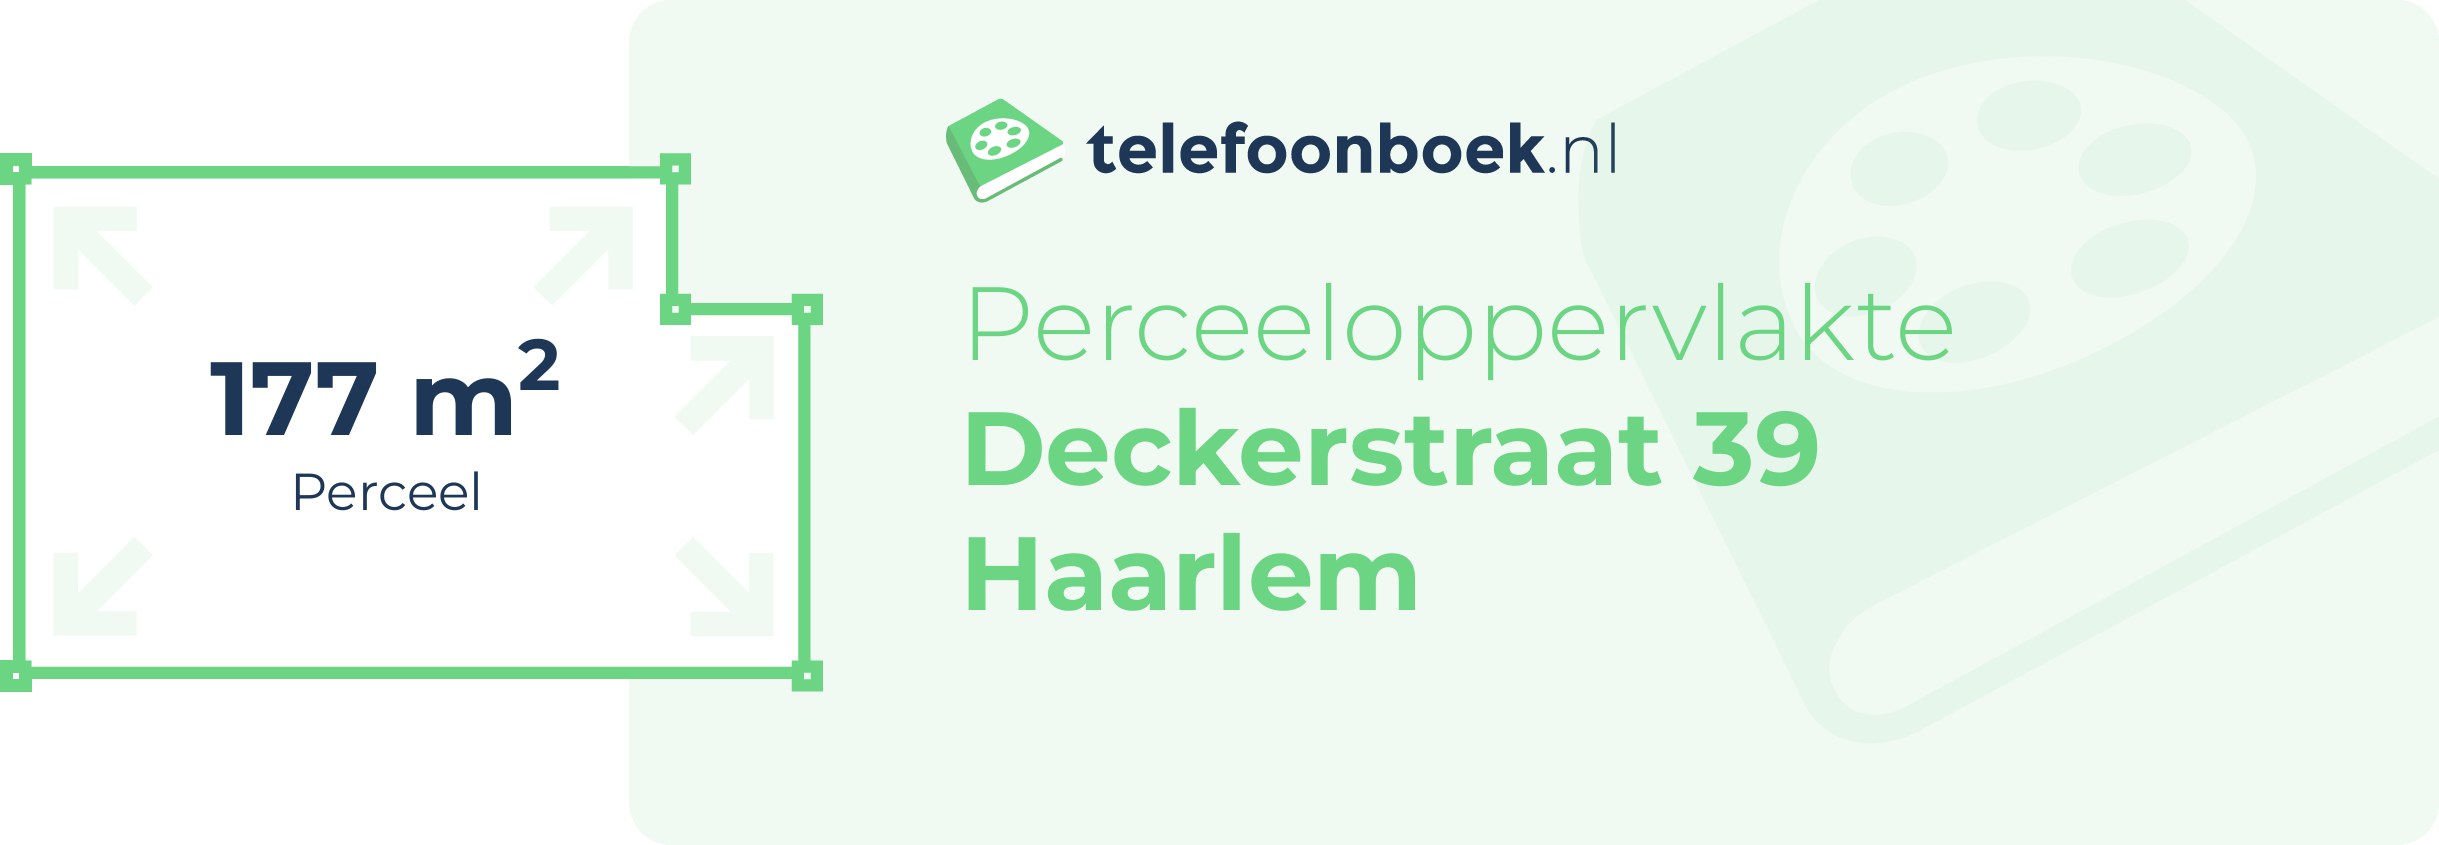 Perceeloppervlakte Deckerstraat 39 Haarlem